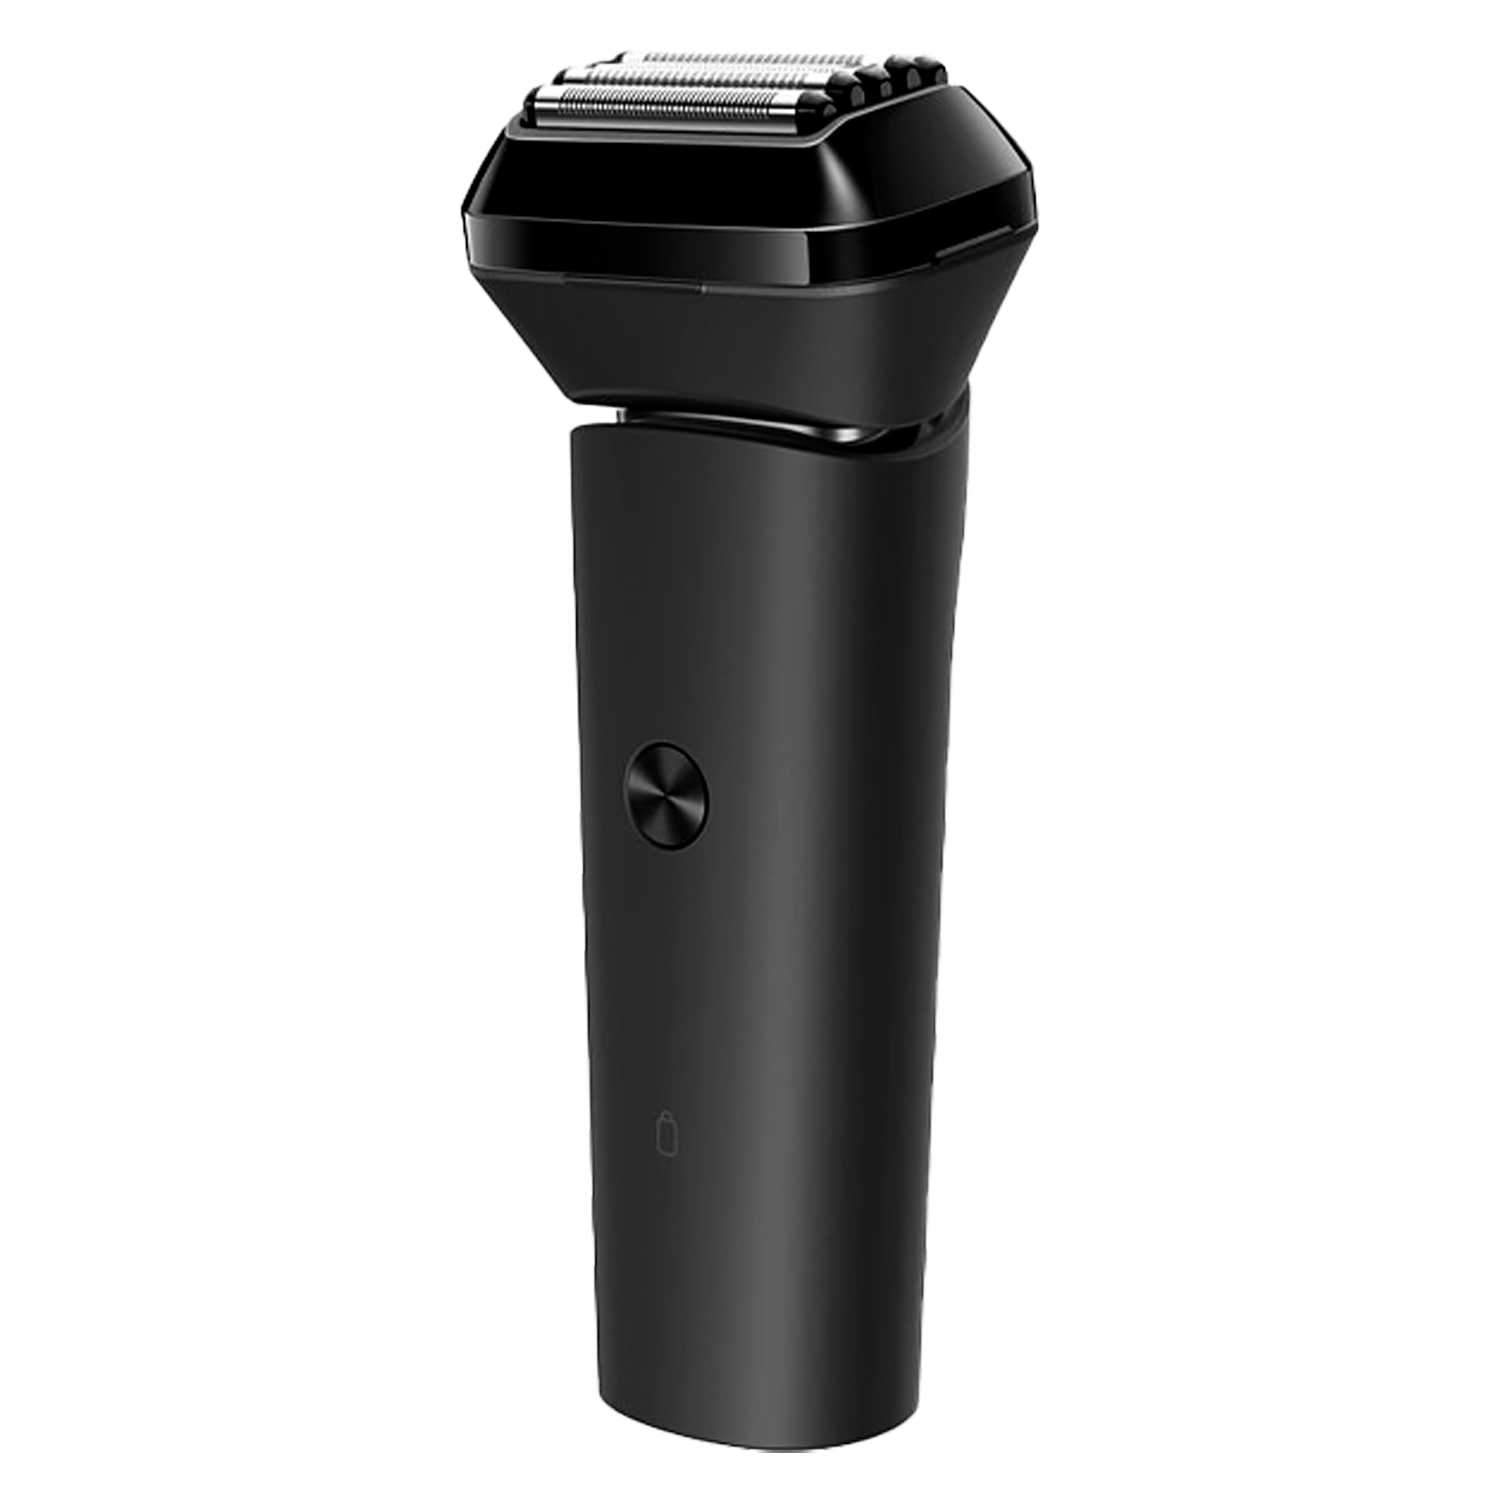 Barbeador Xiaomi MI 5 Blade Electric Shaver MSW501 Recarregável -  Preto